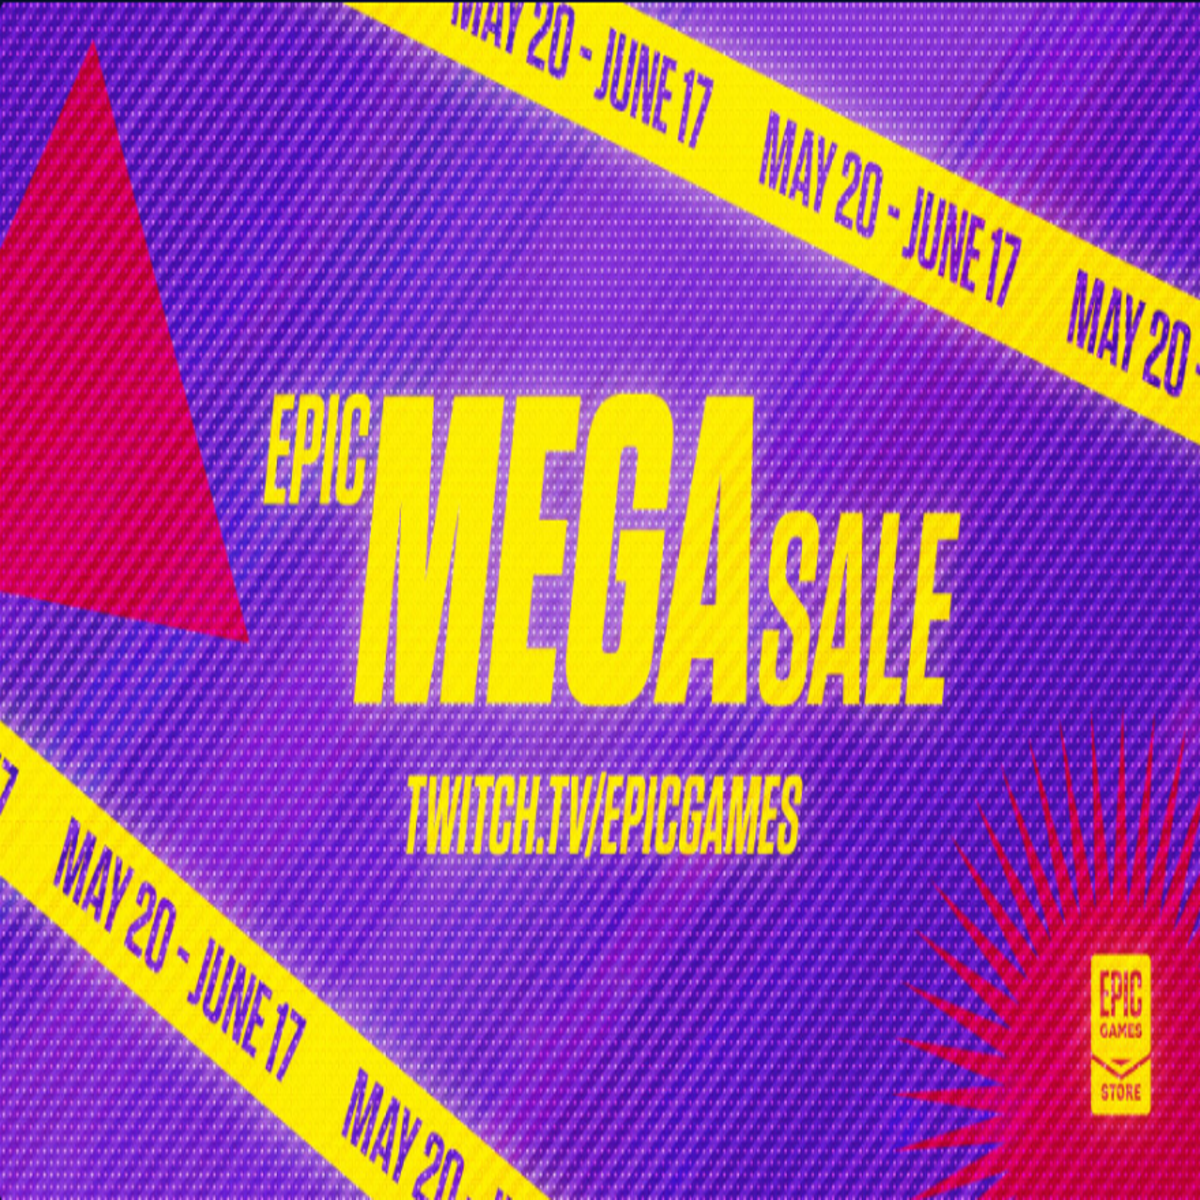 Epic MEGA Sale Week One Highlights! - Epic Games Store